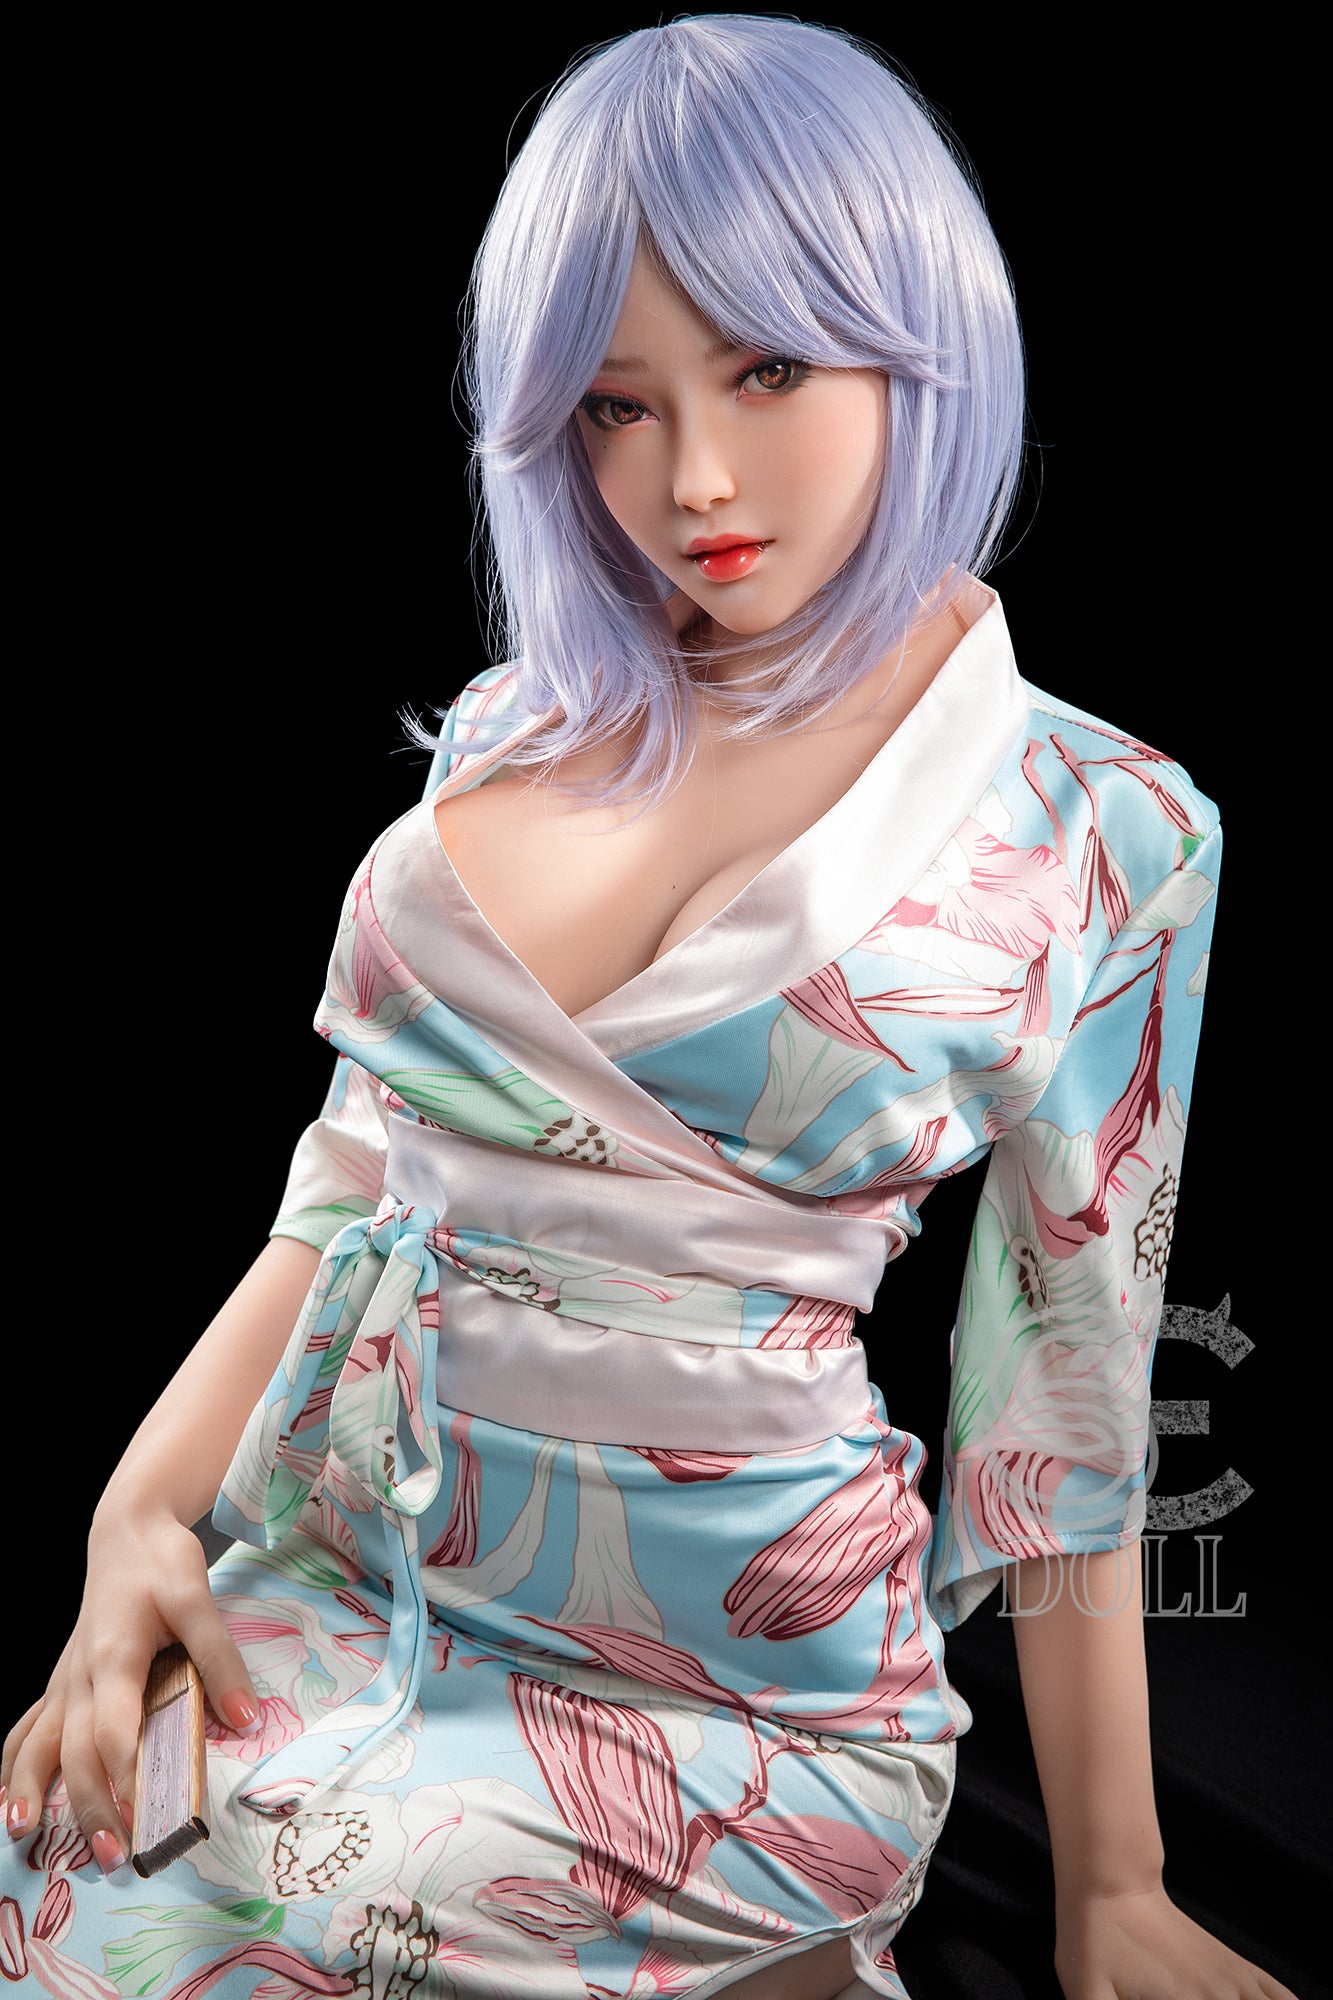 SEDOLL 165 cm F TPE - Murasaki | Buy Sex Dolls at DOLLS ACTUALLY